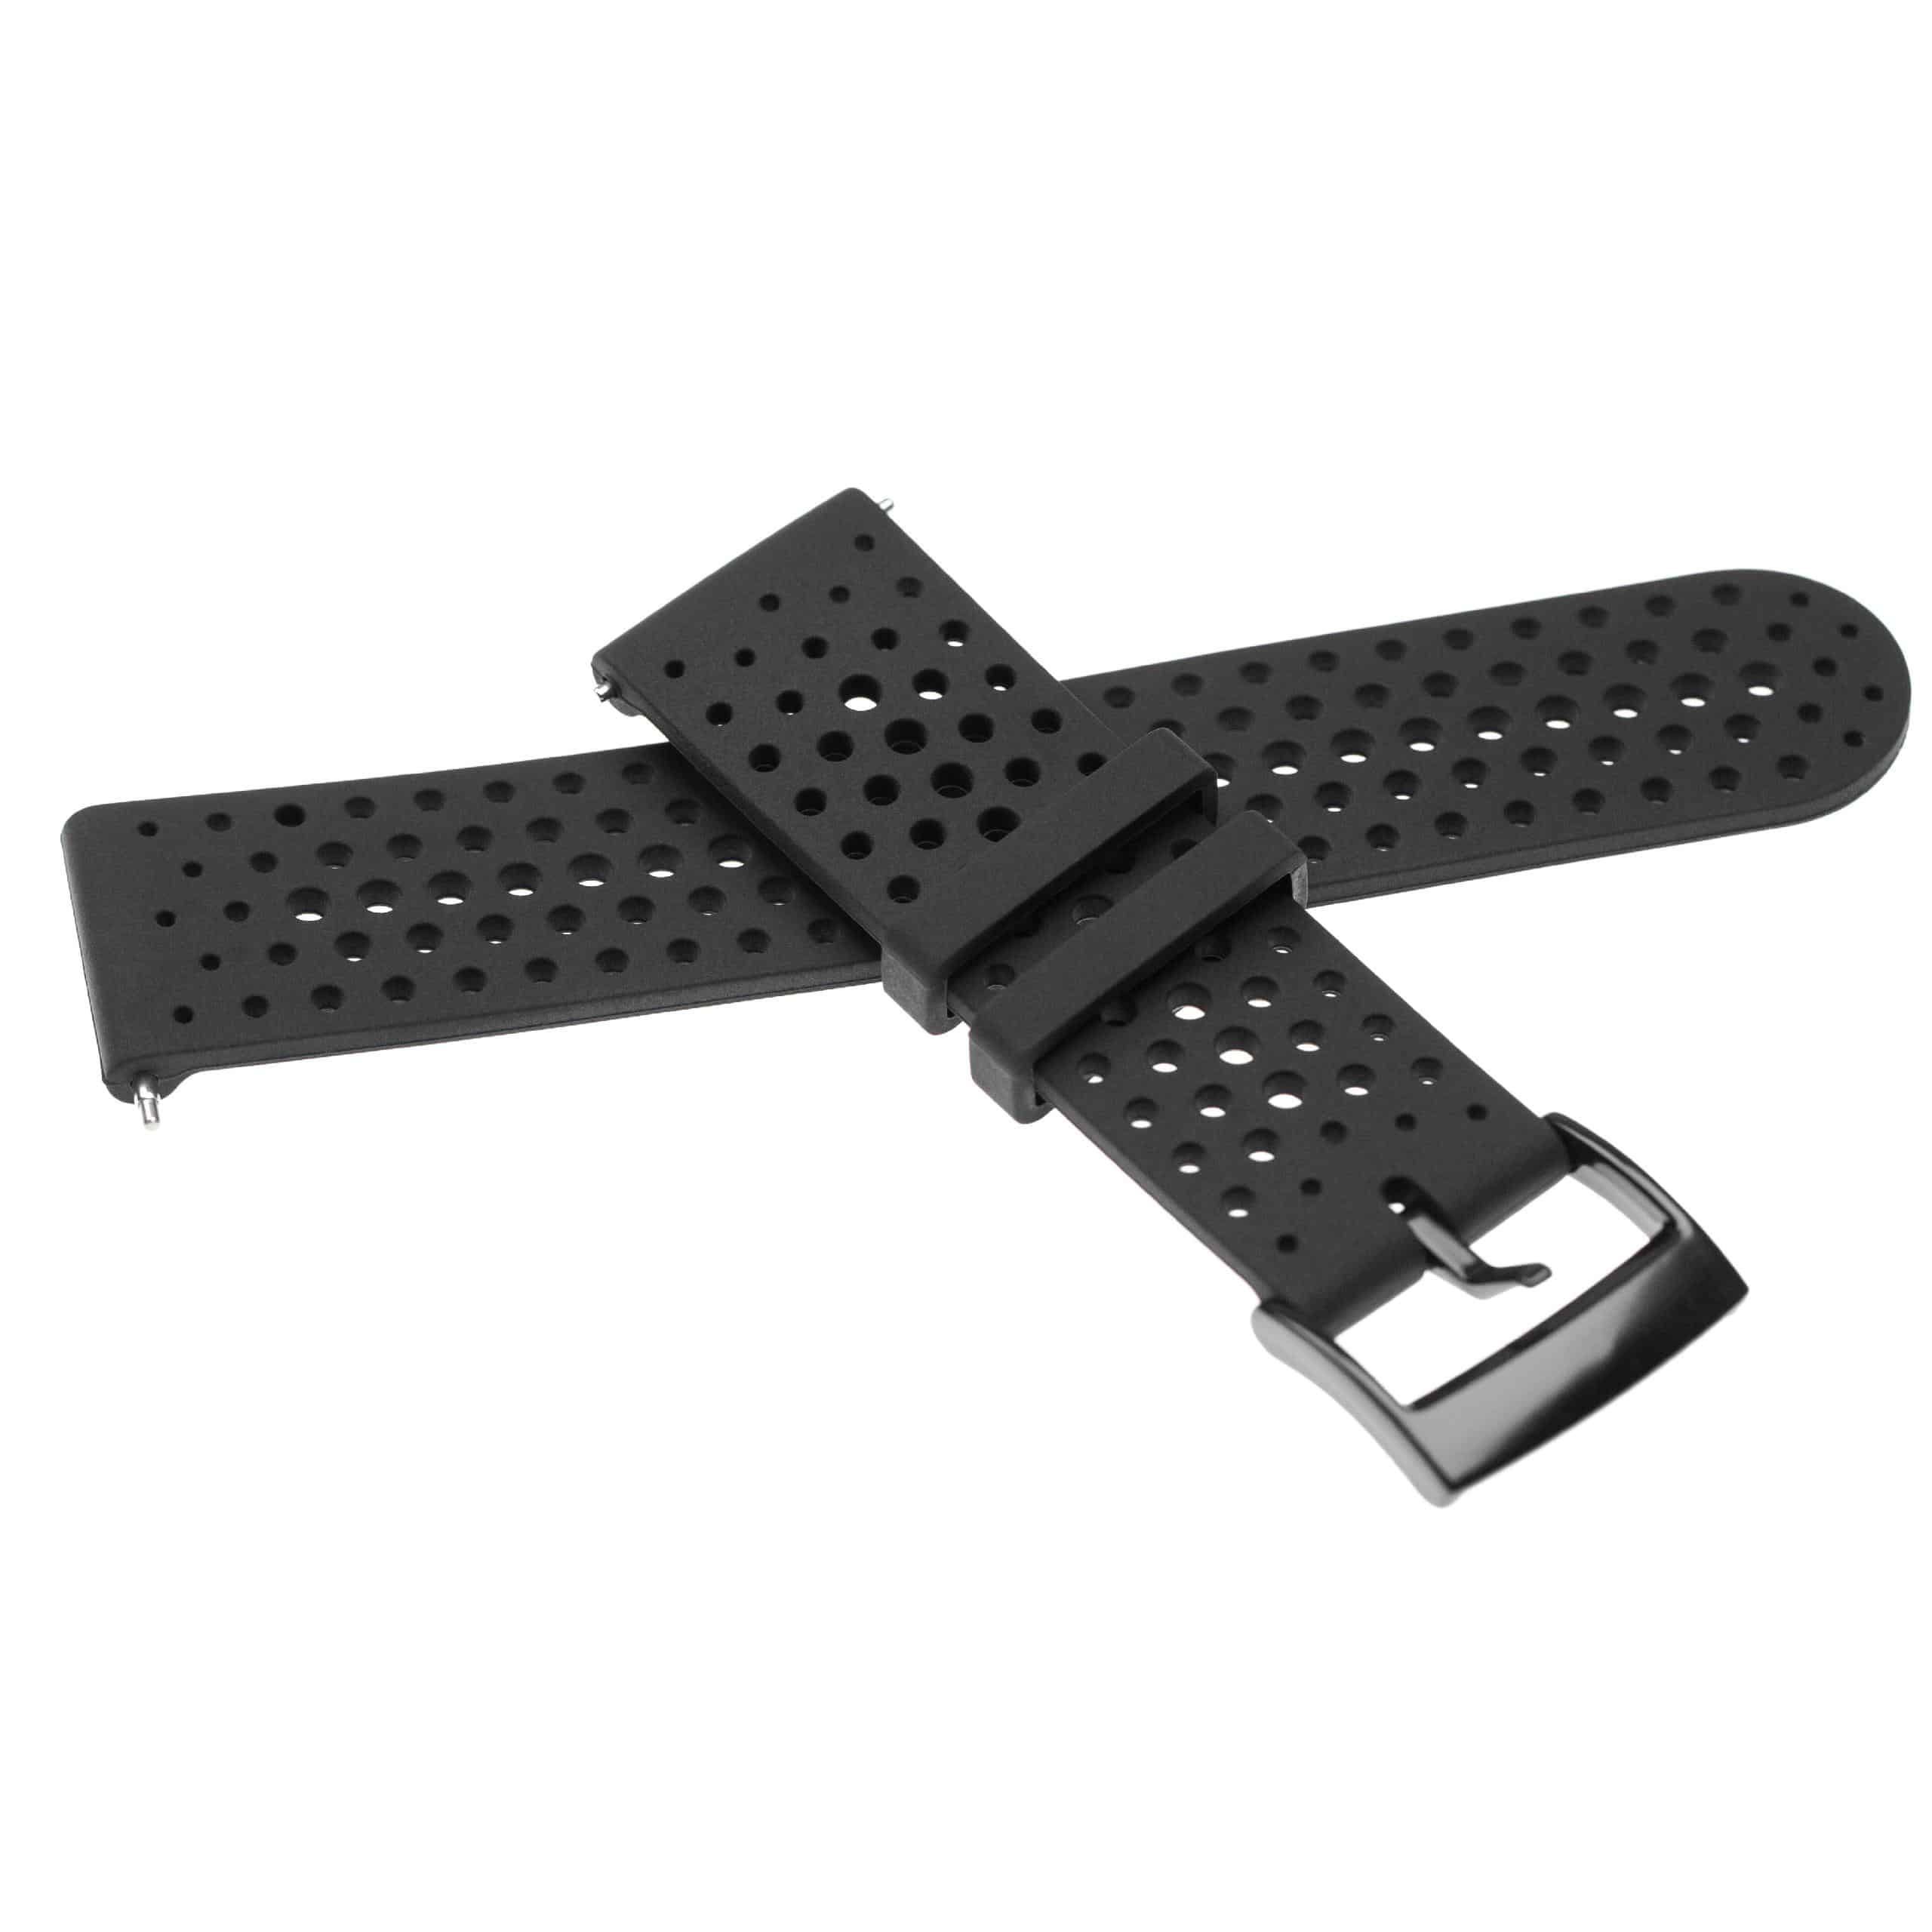 wristband for Suunto Smartwatch - 13.4 + 9.5 cm long, 24mm wide, silicone, black